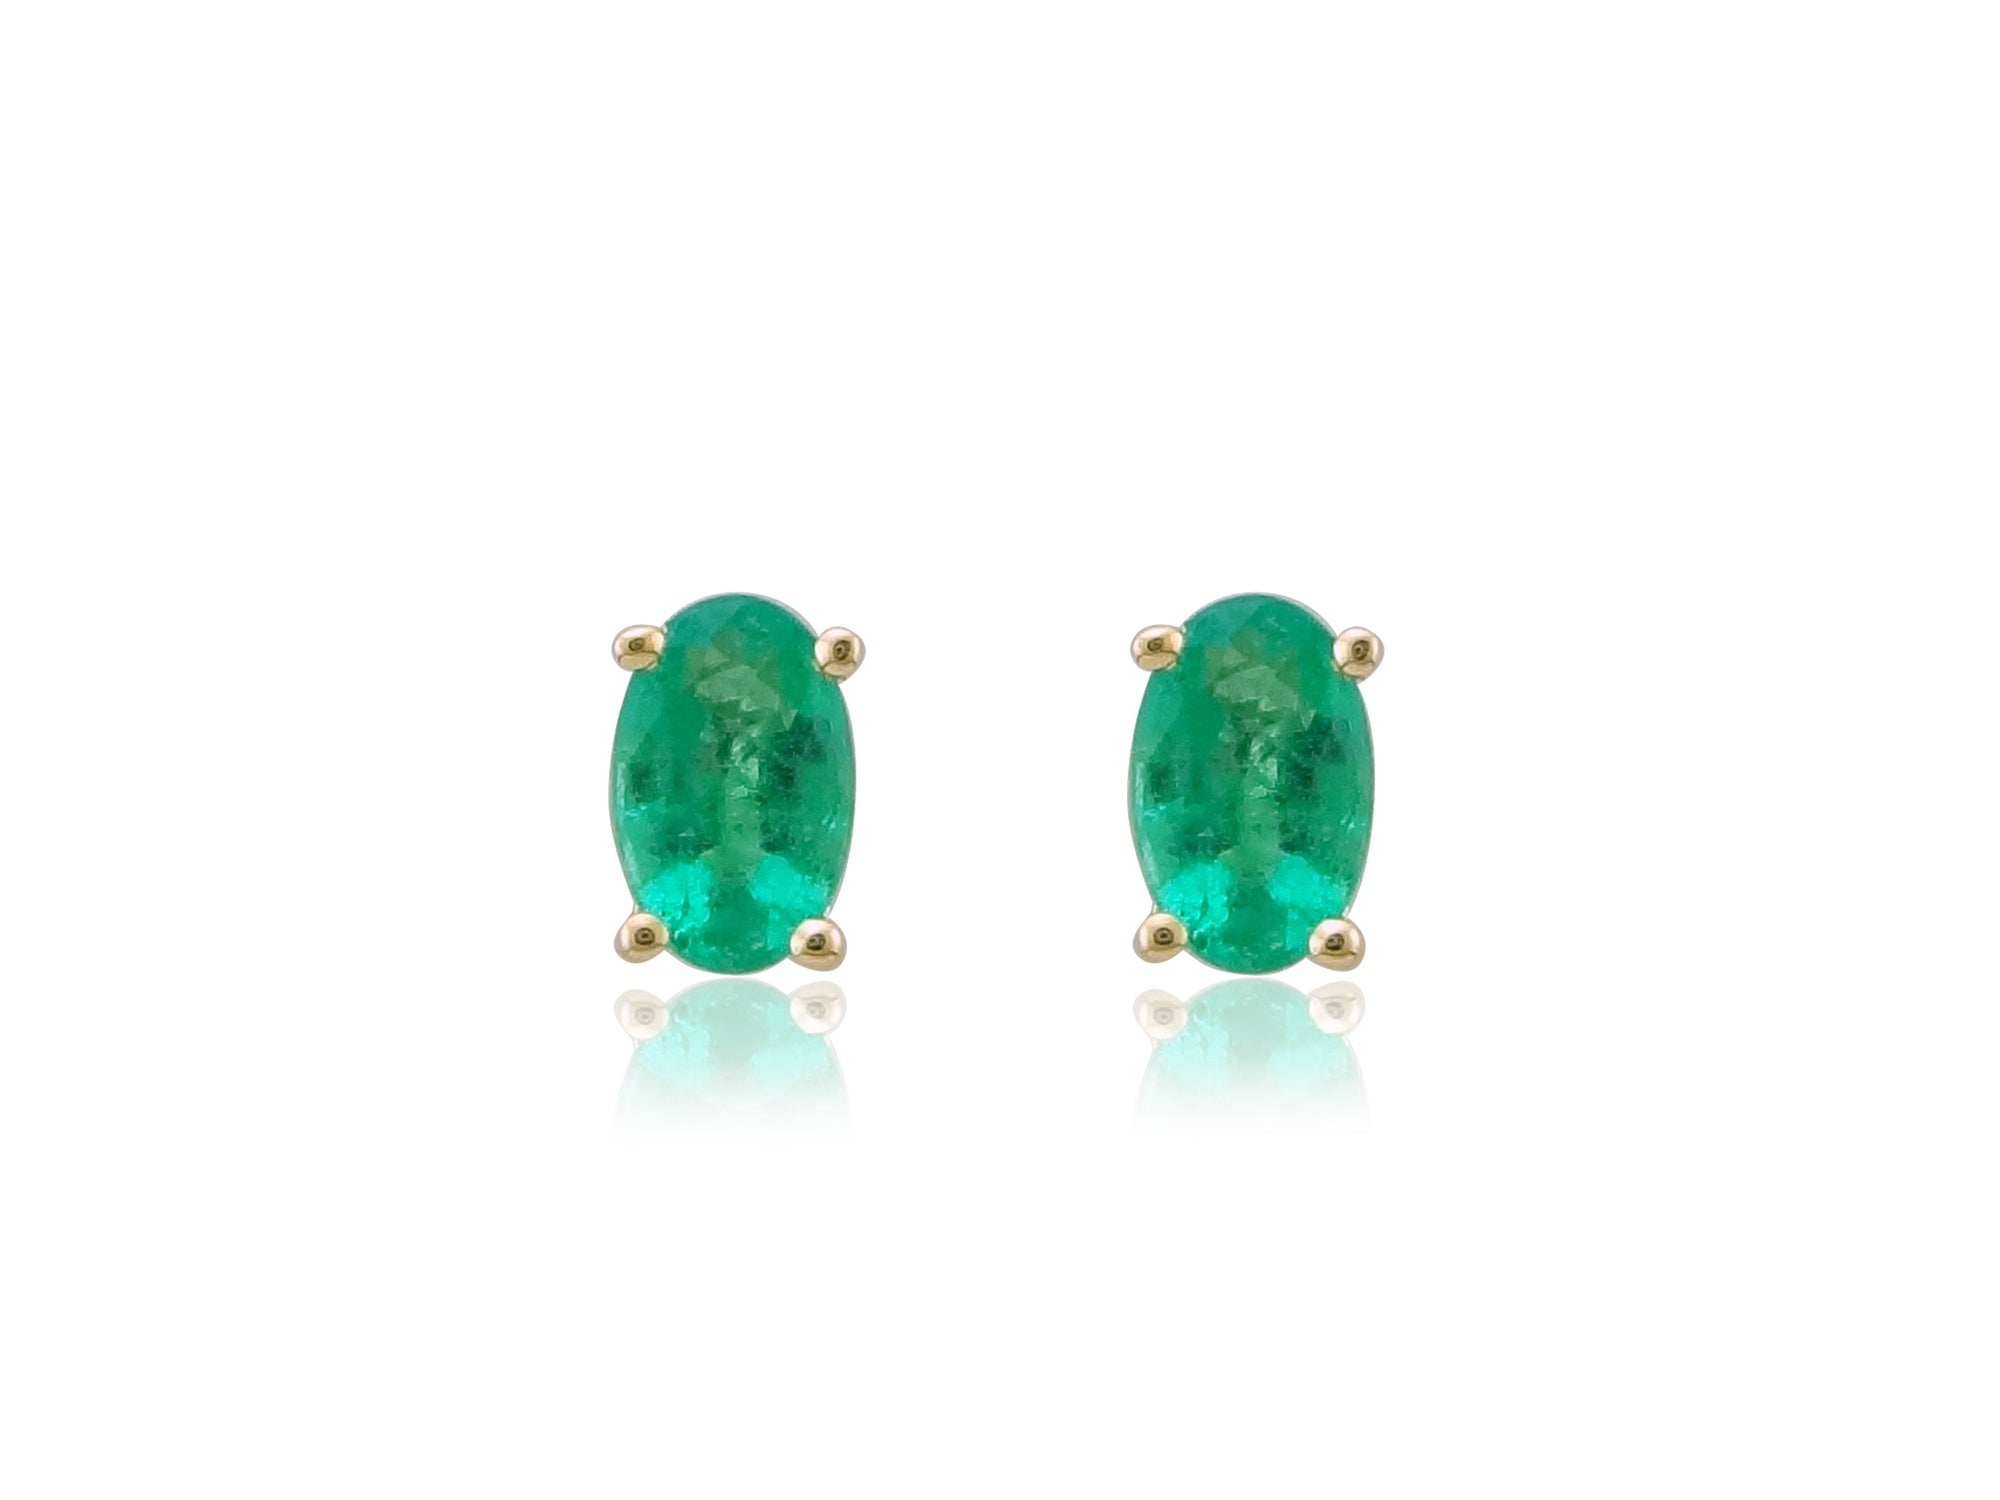 9ct gold 5x3mm oval emerald stud earrings